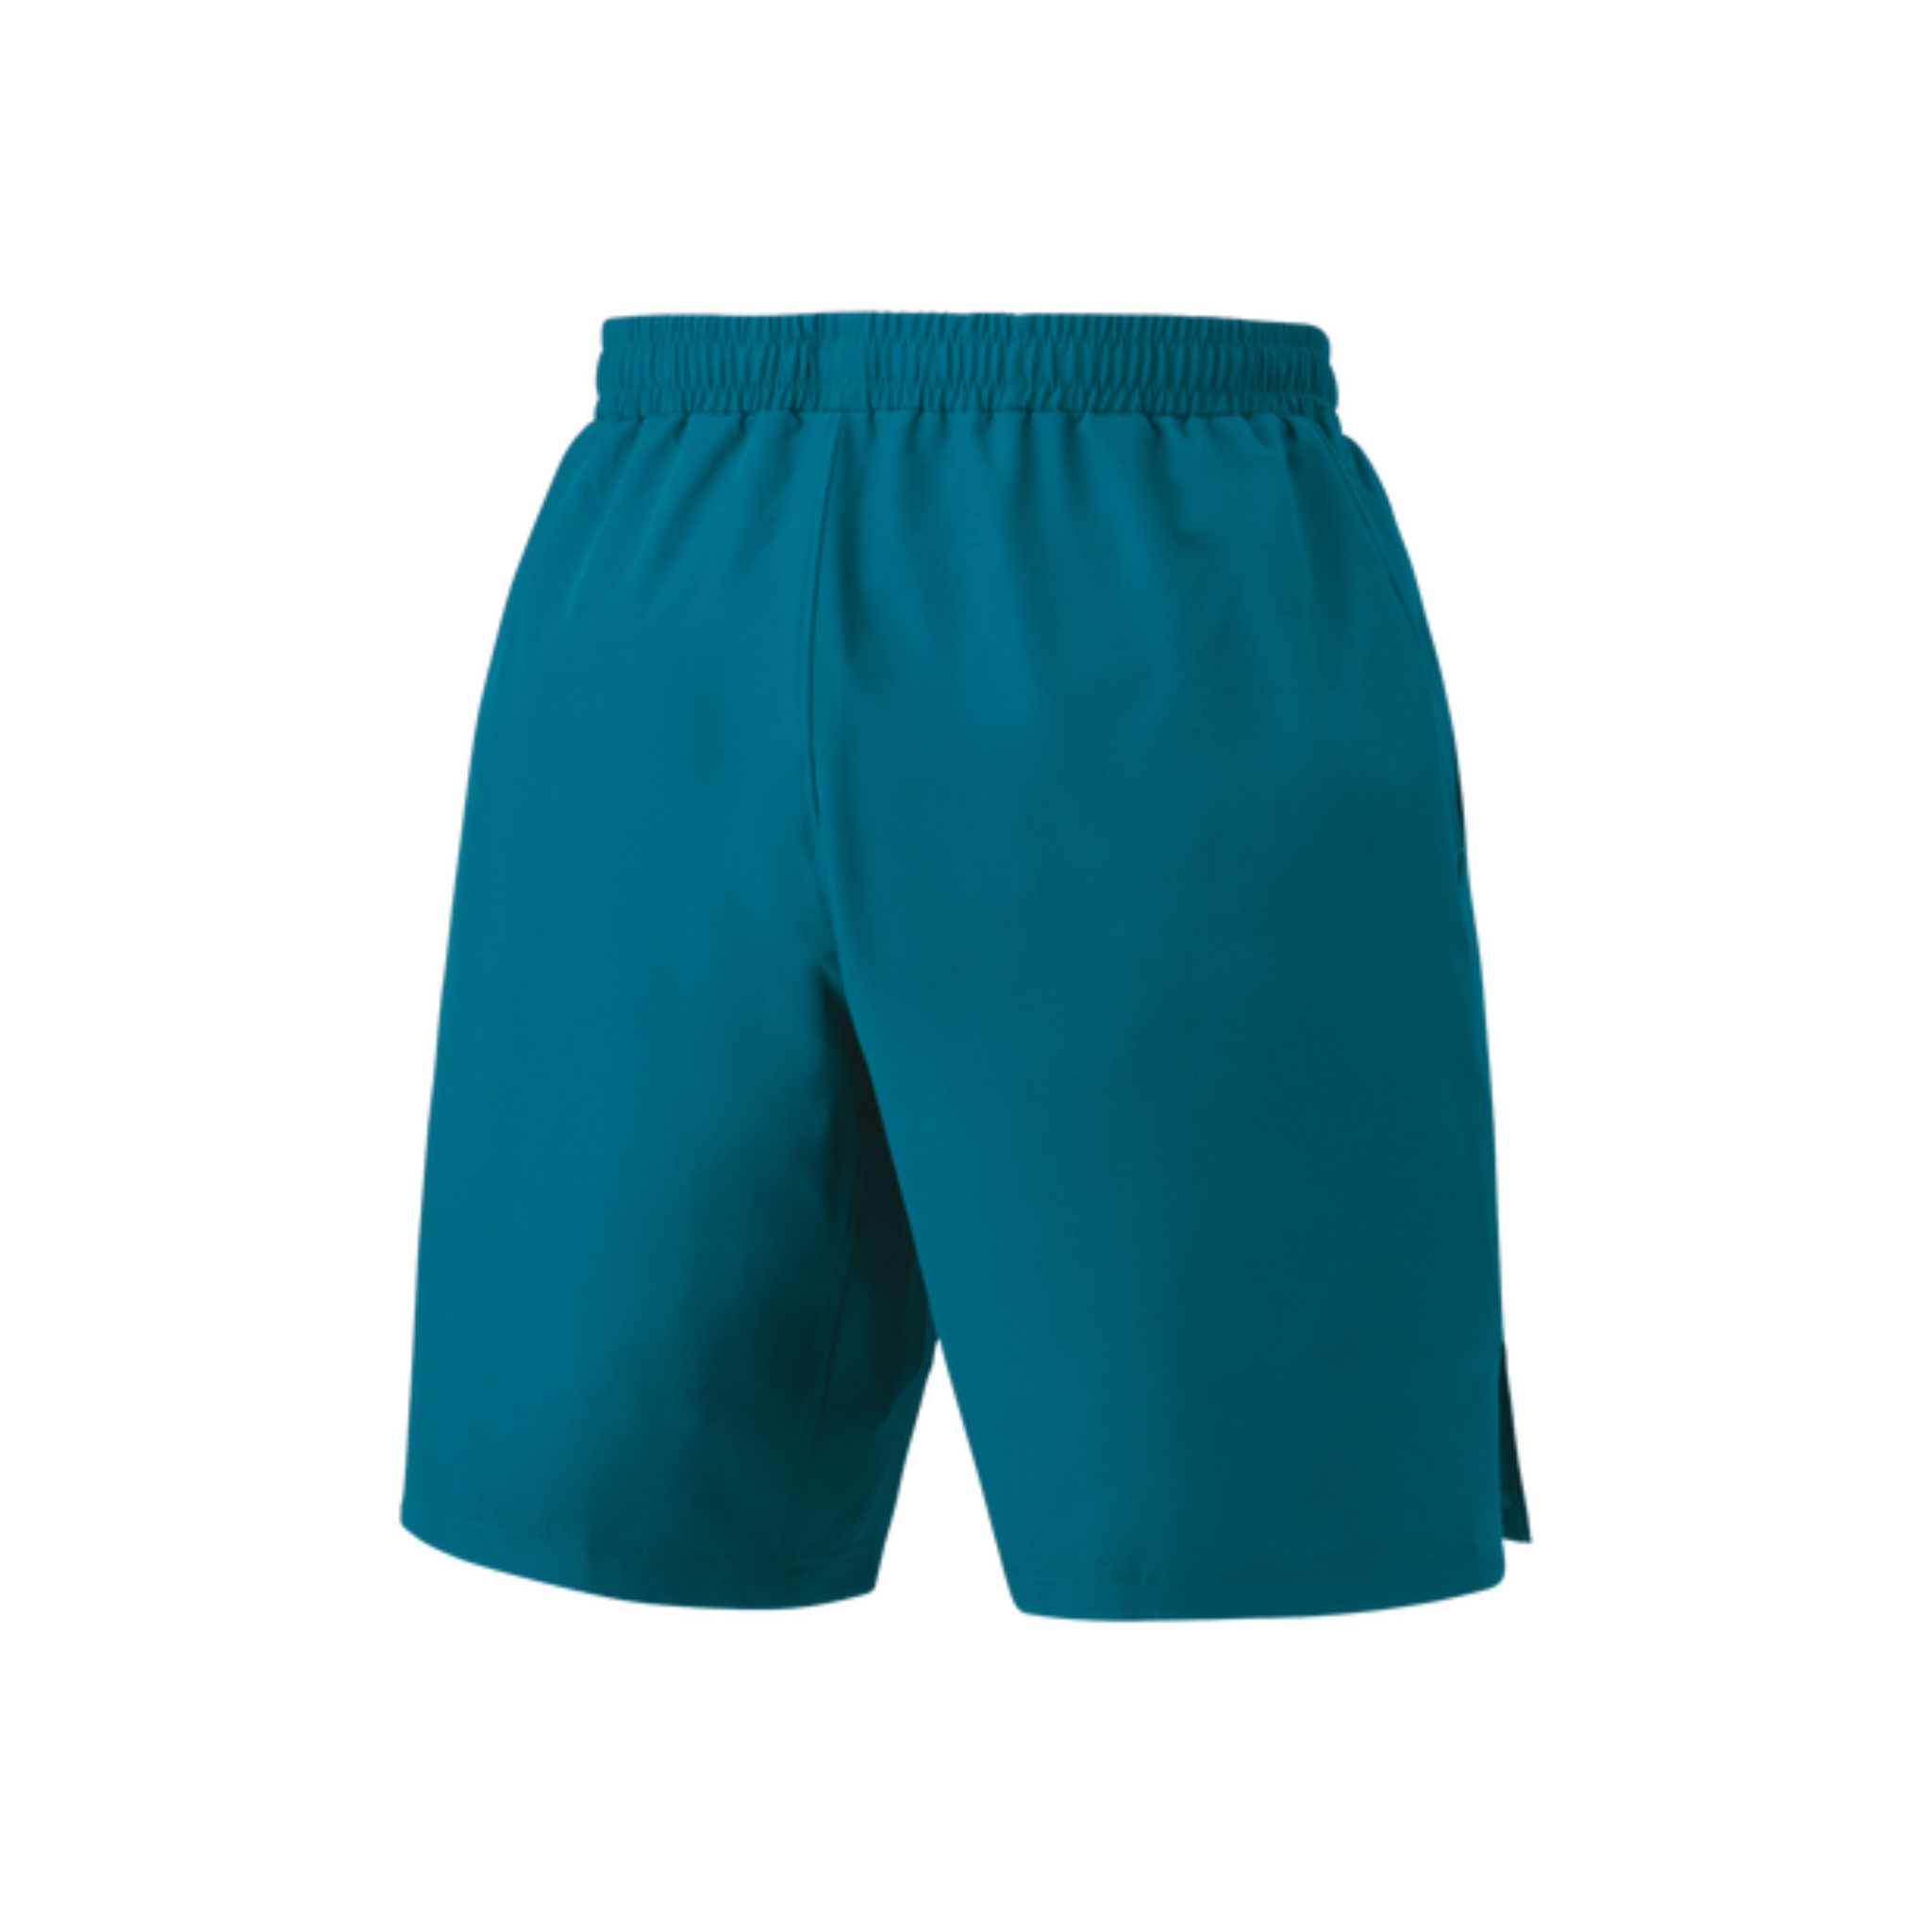 Yonex  Men's Shorts - Blue/Green